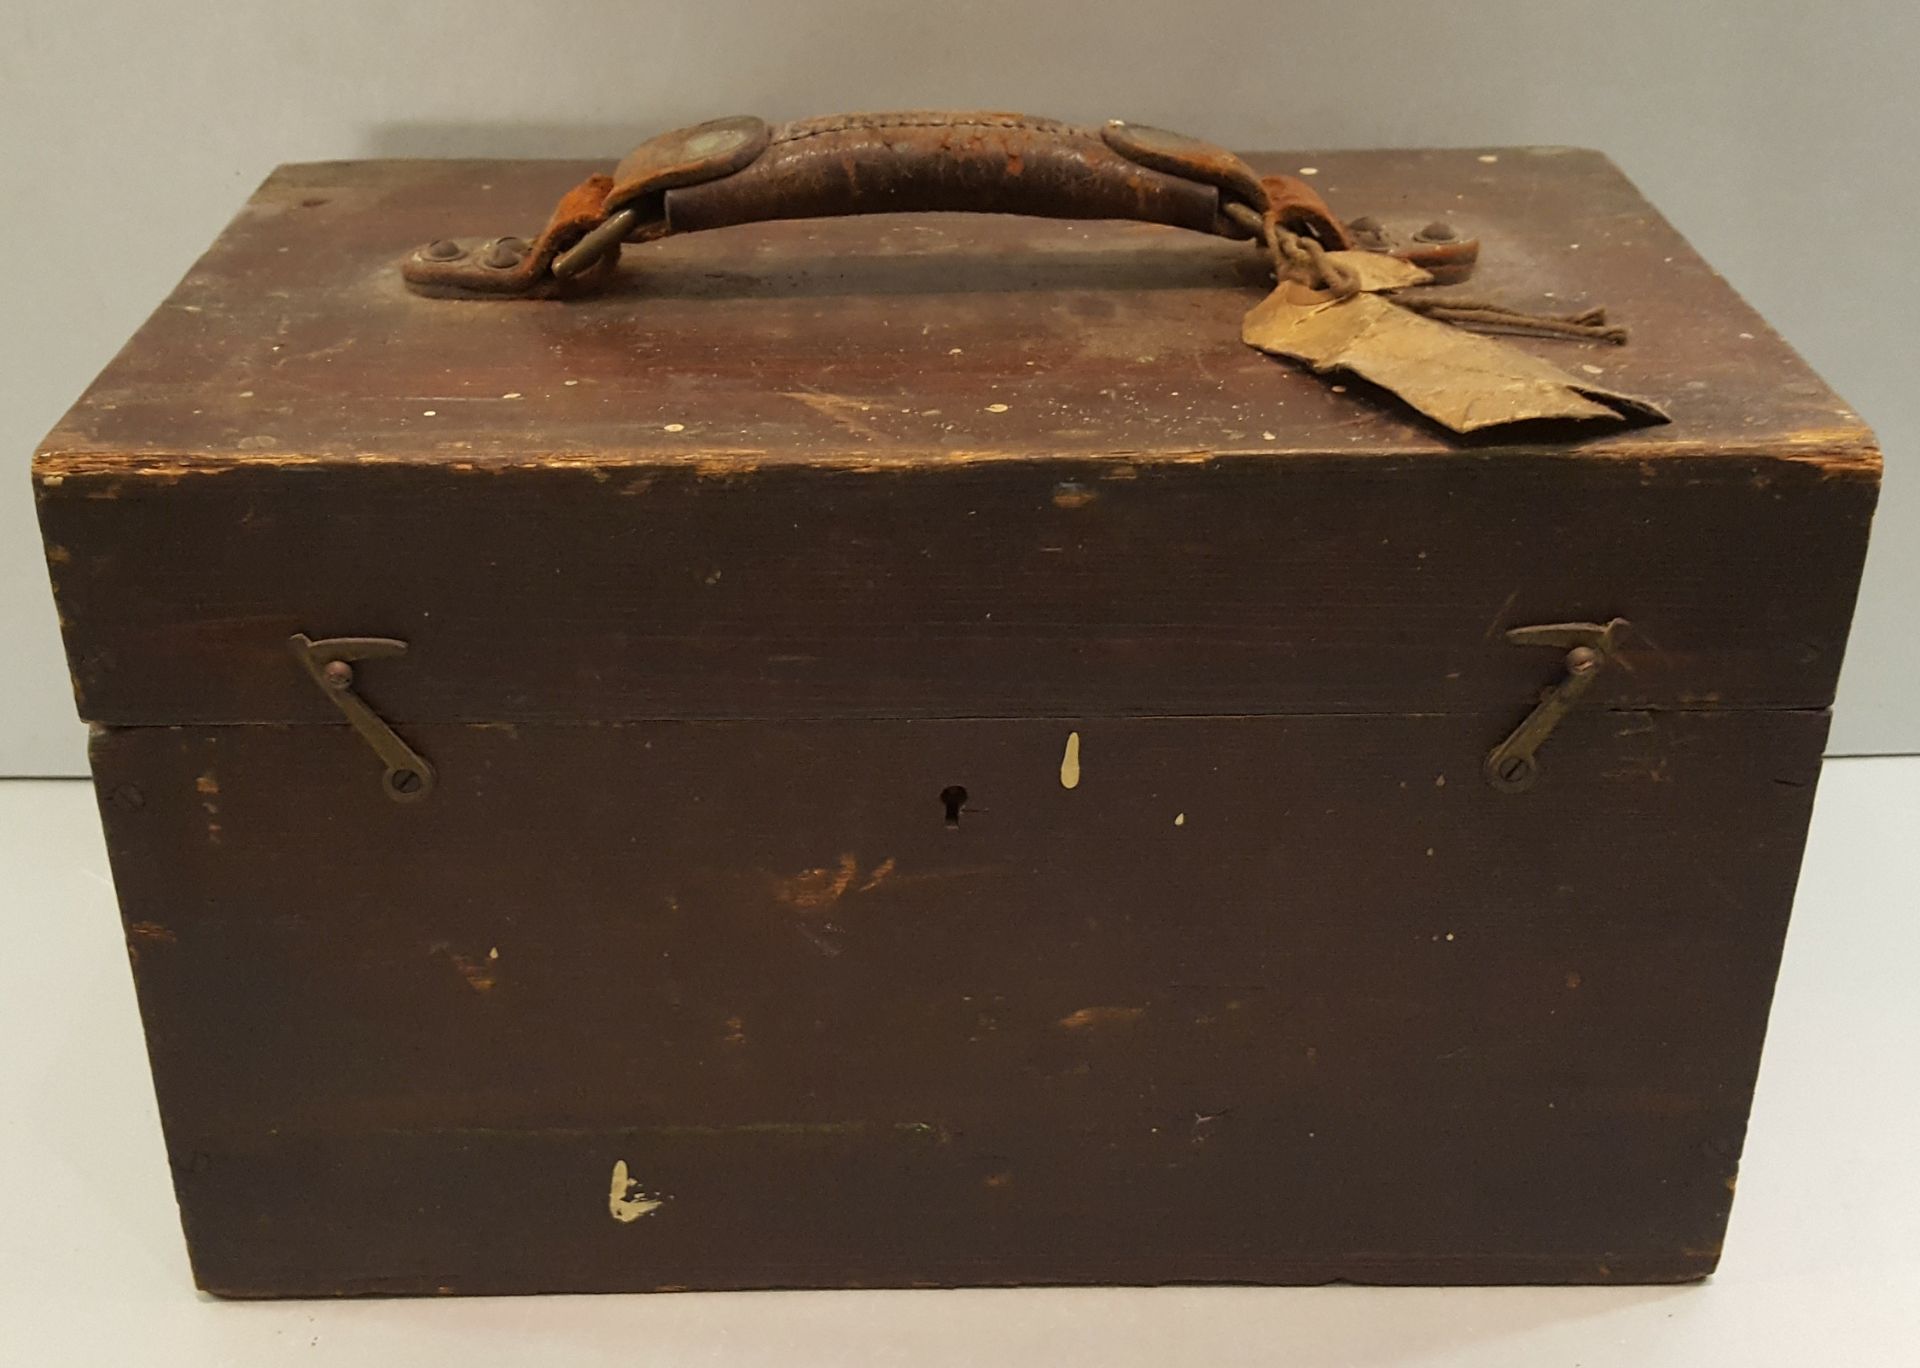 Vintage Retro Scientific Instrument The Ashdown Rotoscope In Original Box. - Image 3 of 3